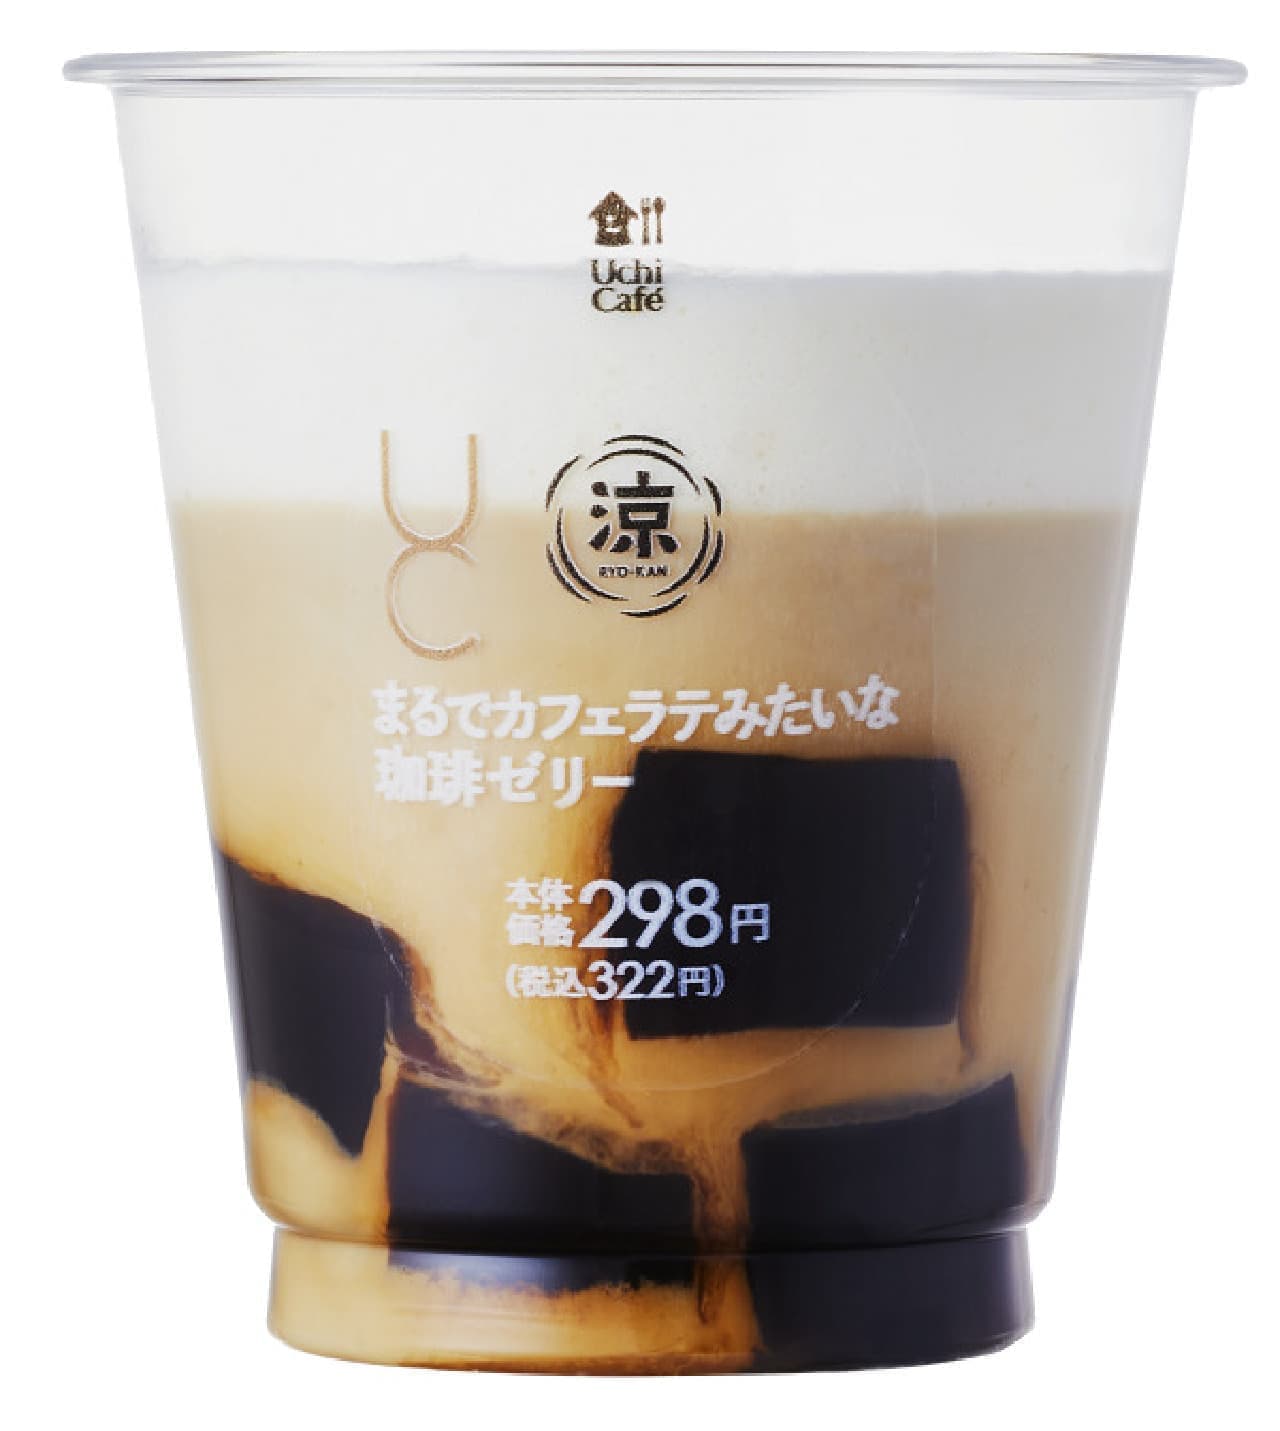 Lawson "Uchi Cafe: Coffee Jelly Like a Cafe Latte".